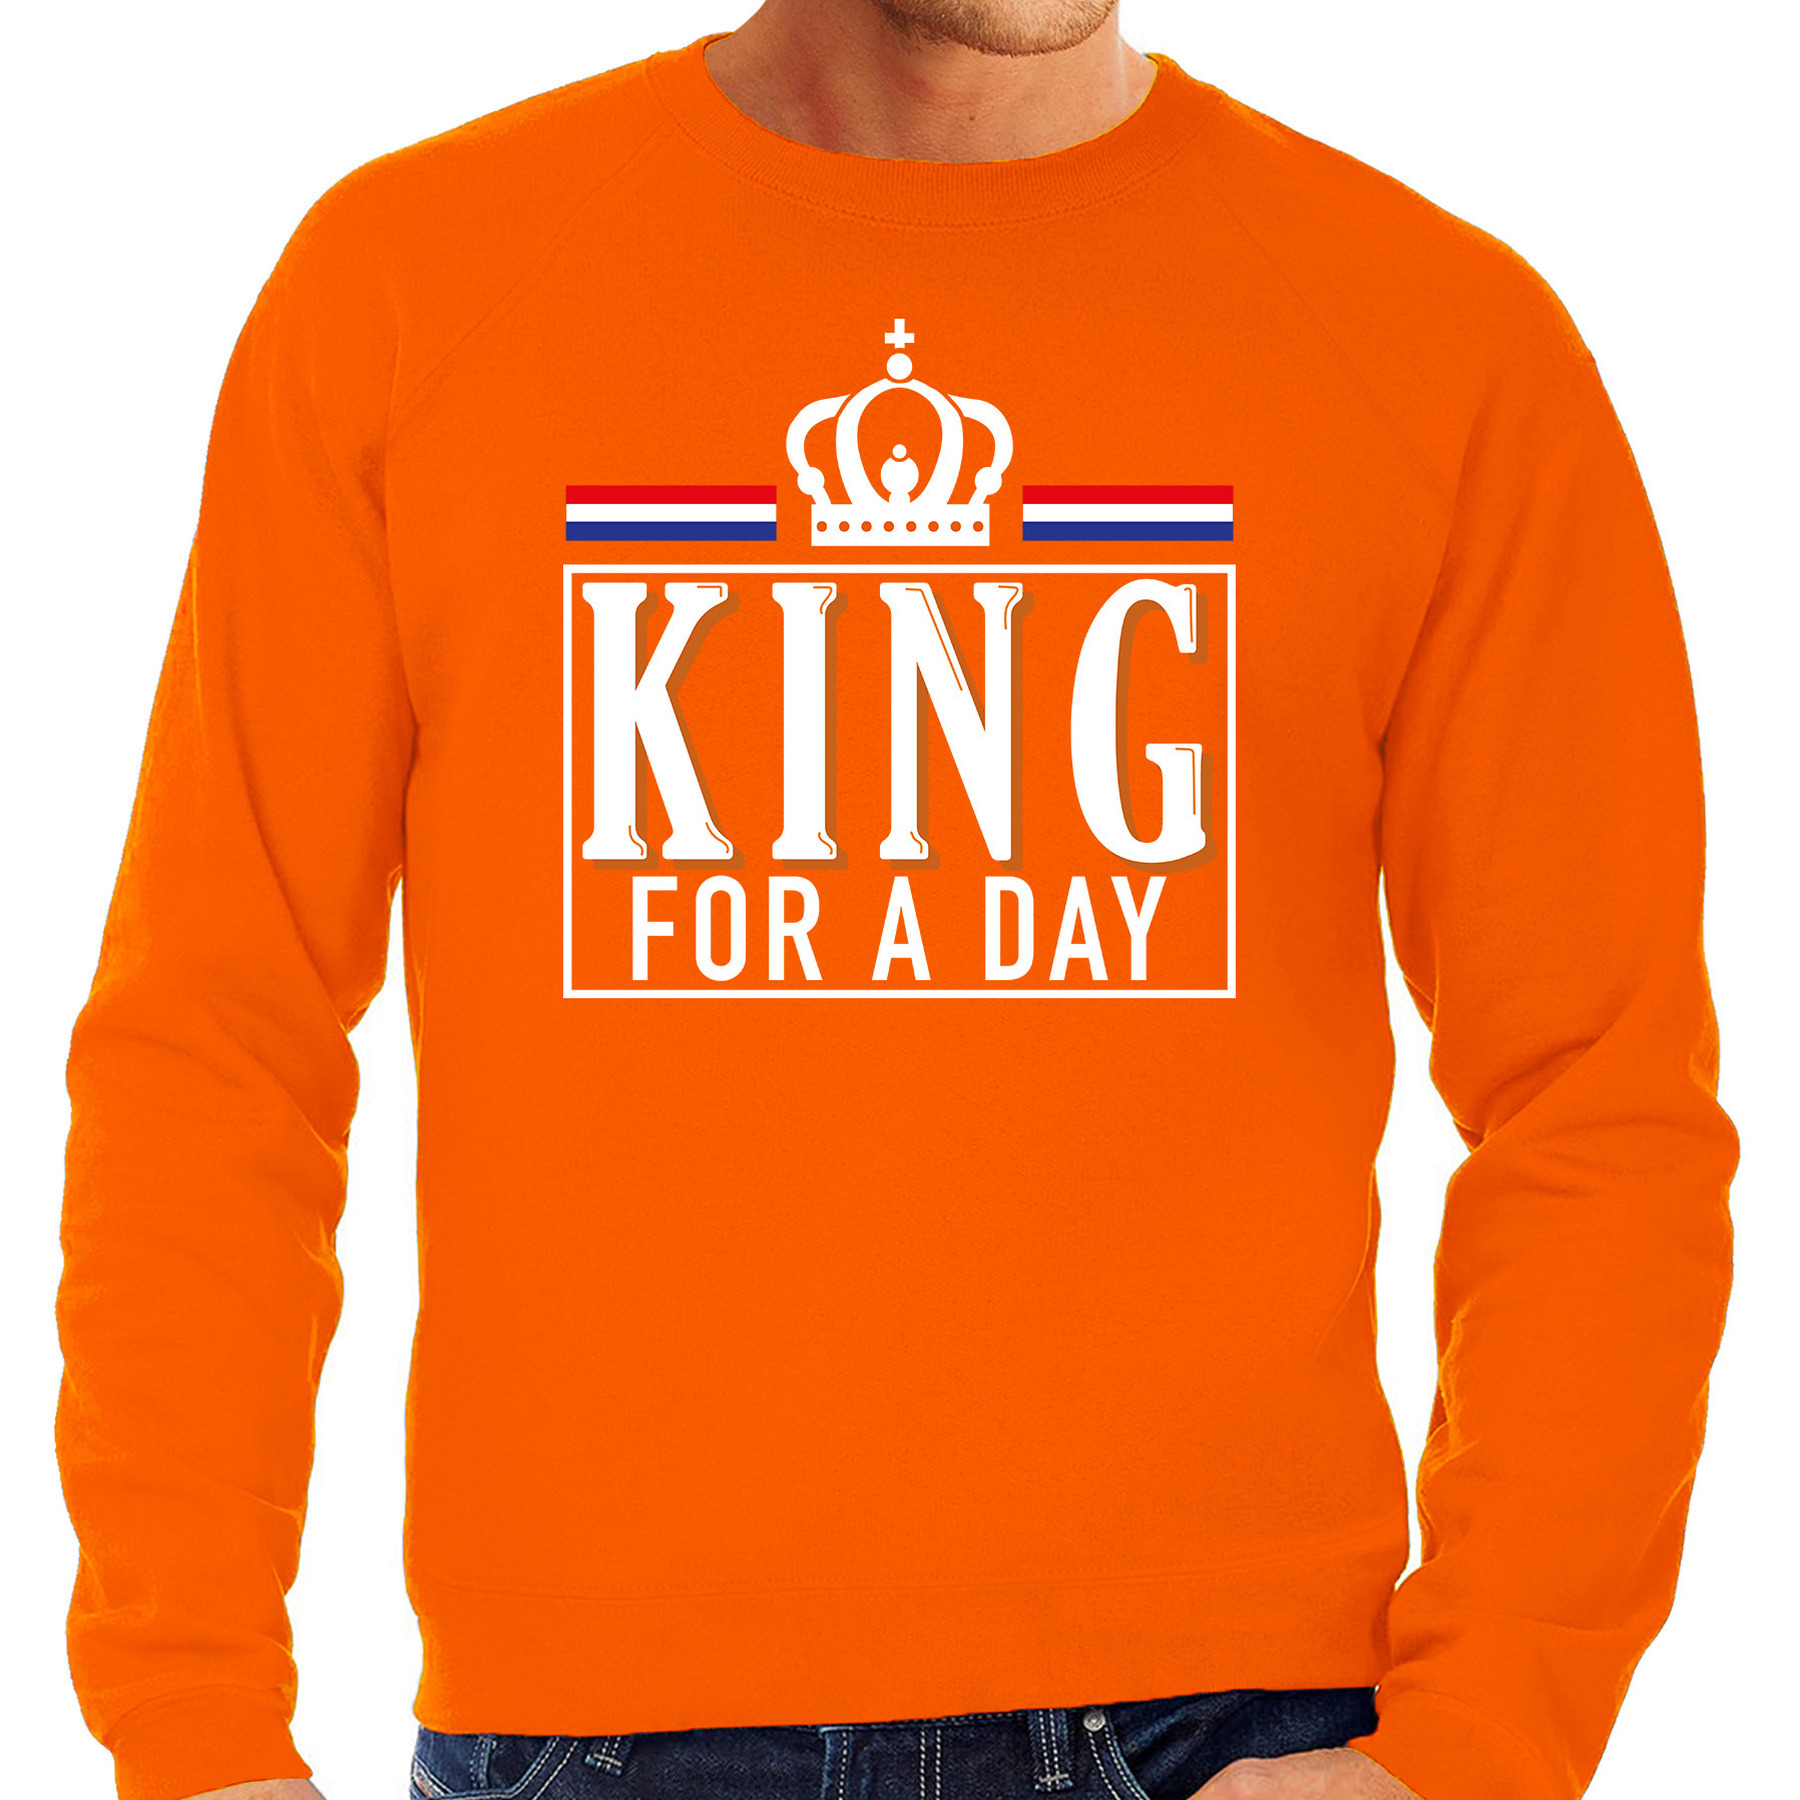 King for a day sweater oranje met witte letters voor heren Koningsdag truien